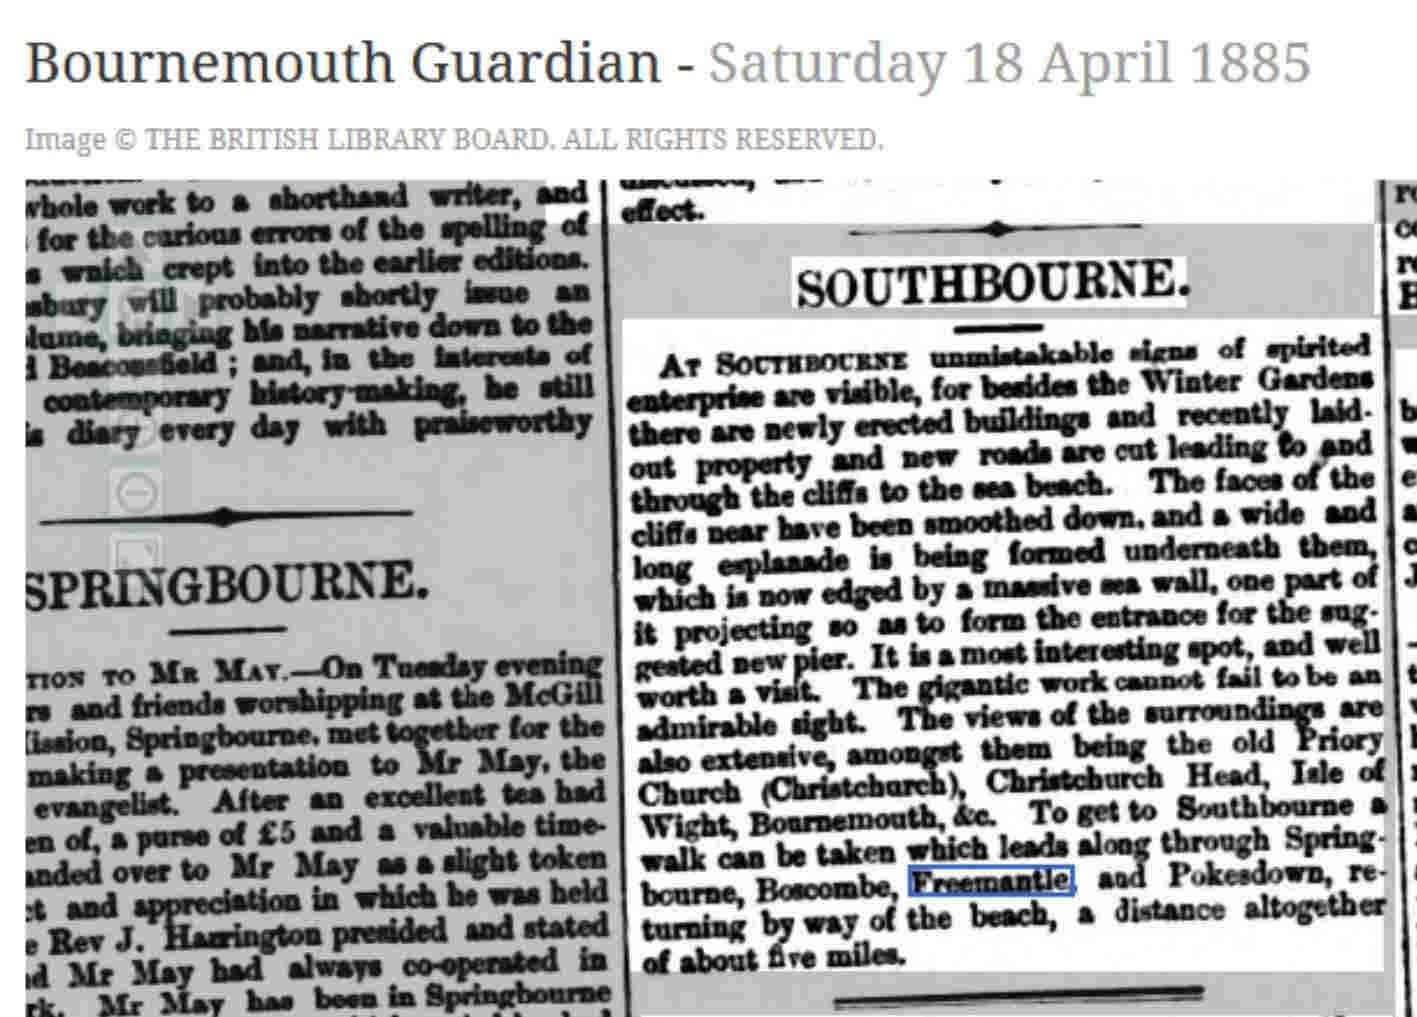 newspaper article 1885 describing a walk through Freemantle